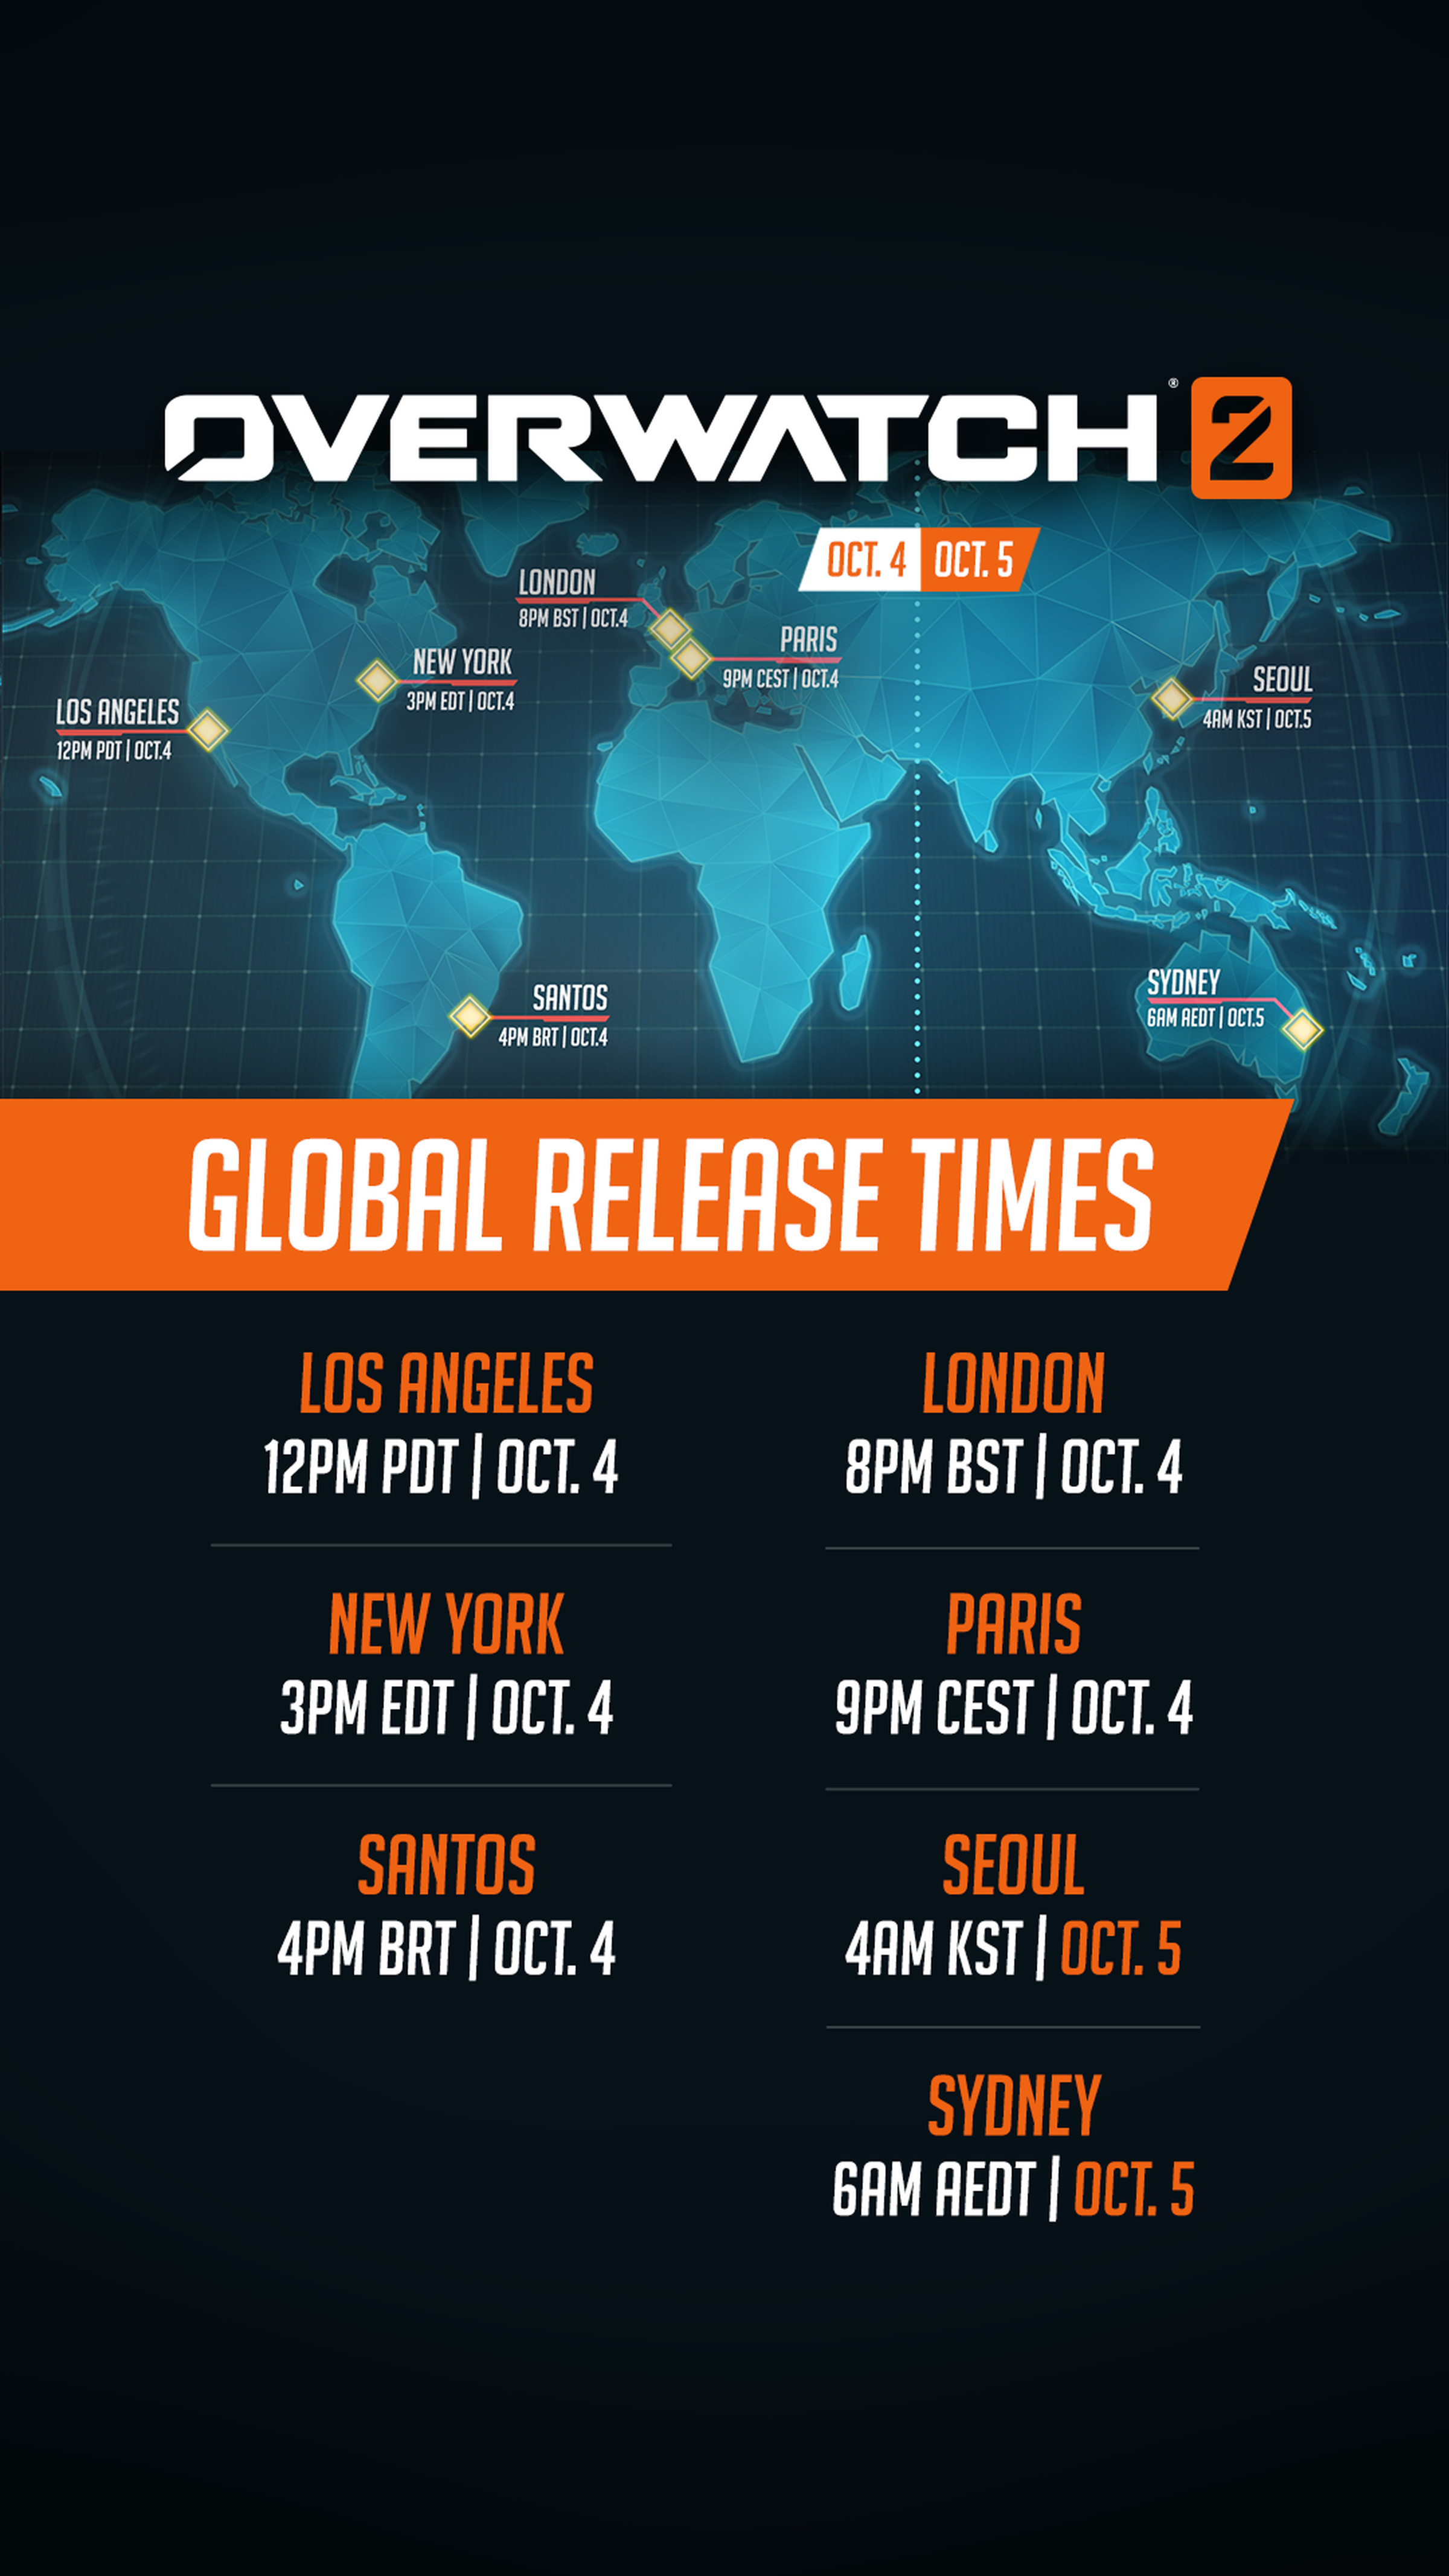 Graphic depicting the Overwatch 2 global release times: Los Angeles 12PM PT, New York 3PM ET, Santos 4PM BRT, London 8PM BST, Paris 9PM CEST, Seoul 4AM KST October 5th, Sydney 6AM AEDT October 5th